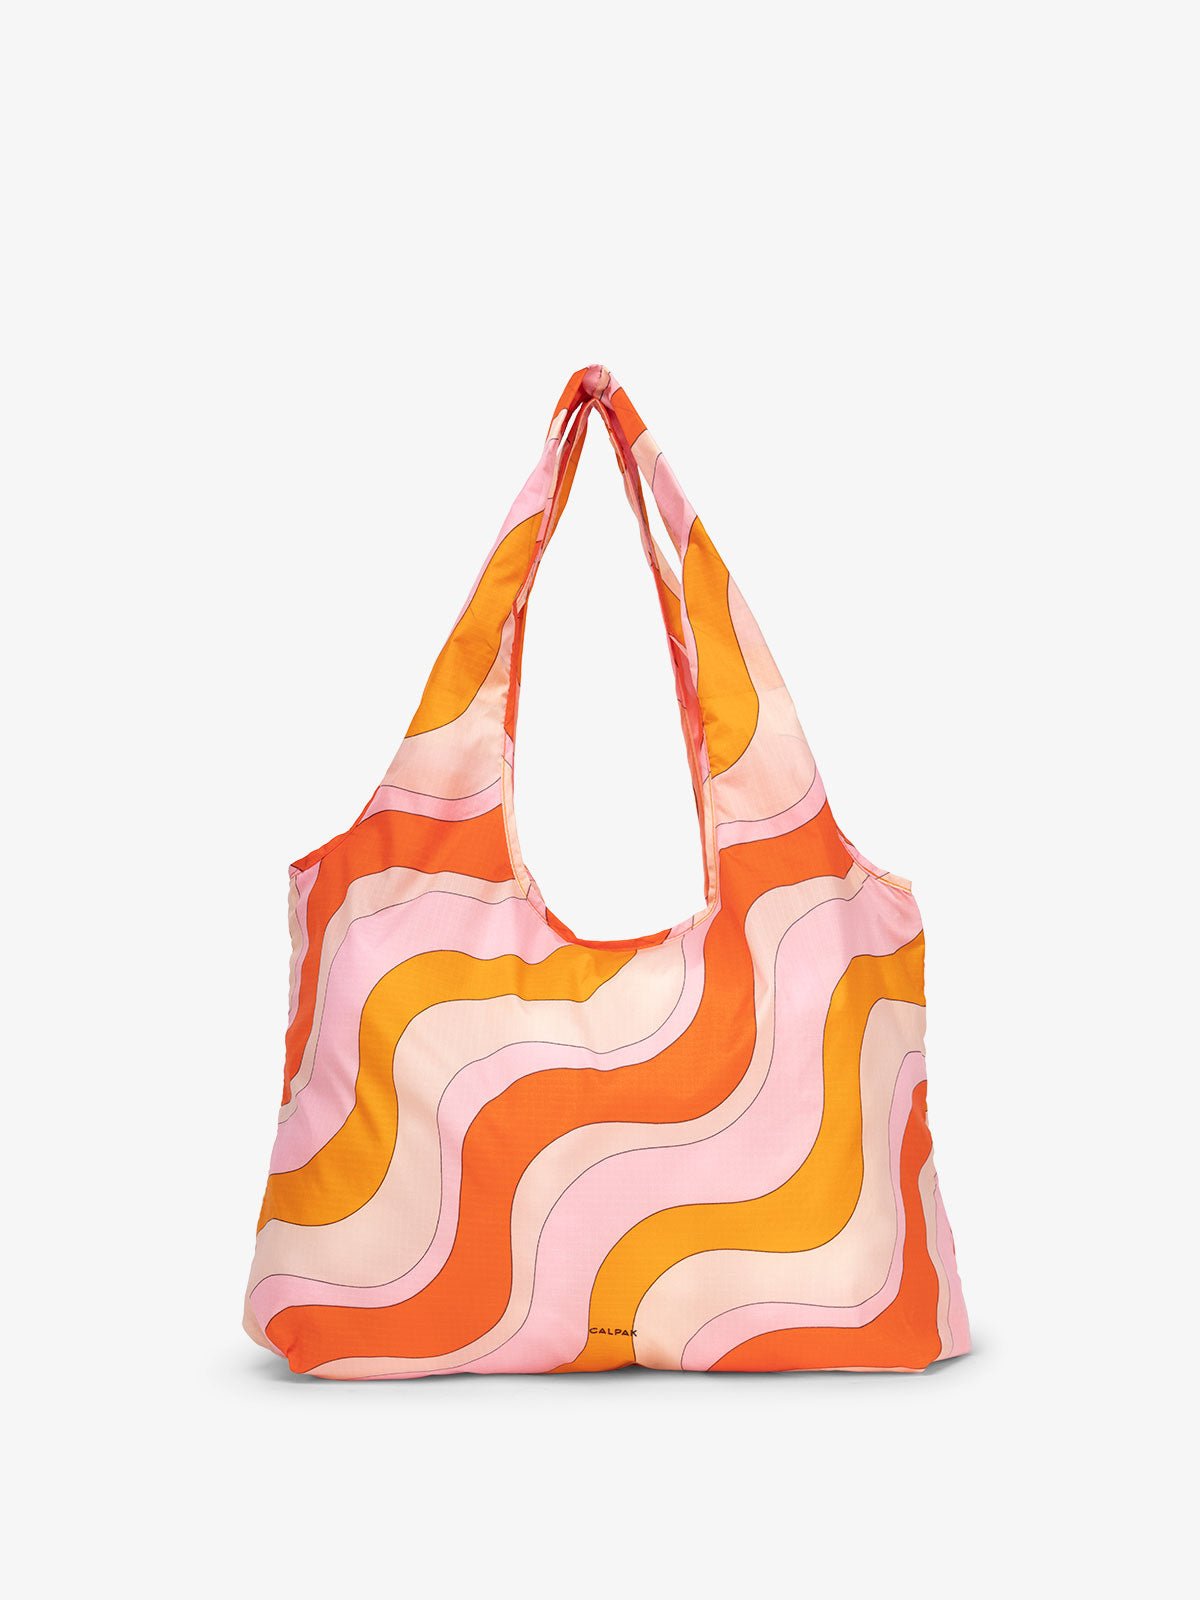 CALPAK compakt tote bag in wavy red pattern